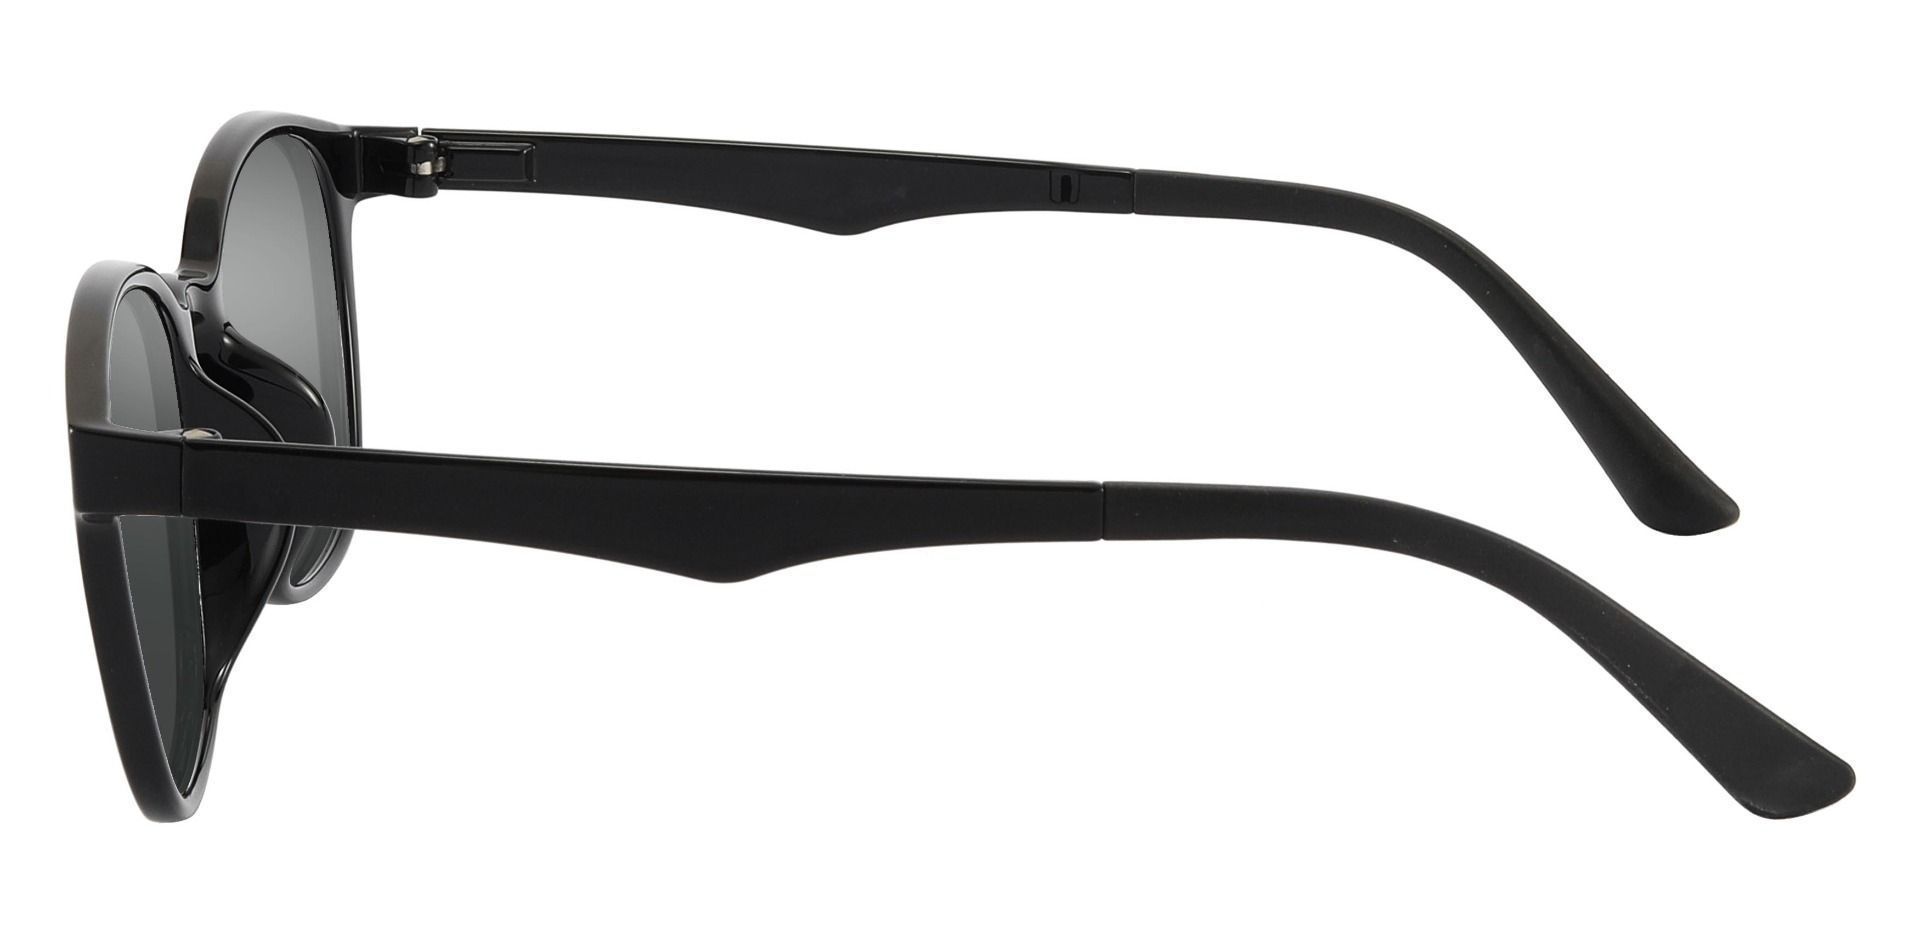 Ursula Oval Reading Sunglasses - Black Frame With Gray Lenses